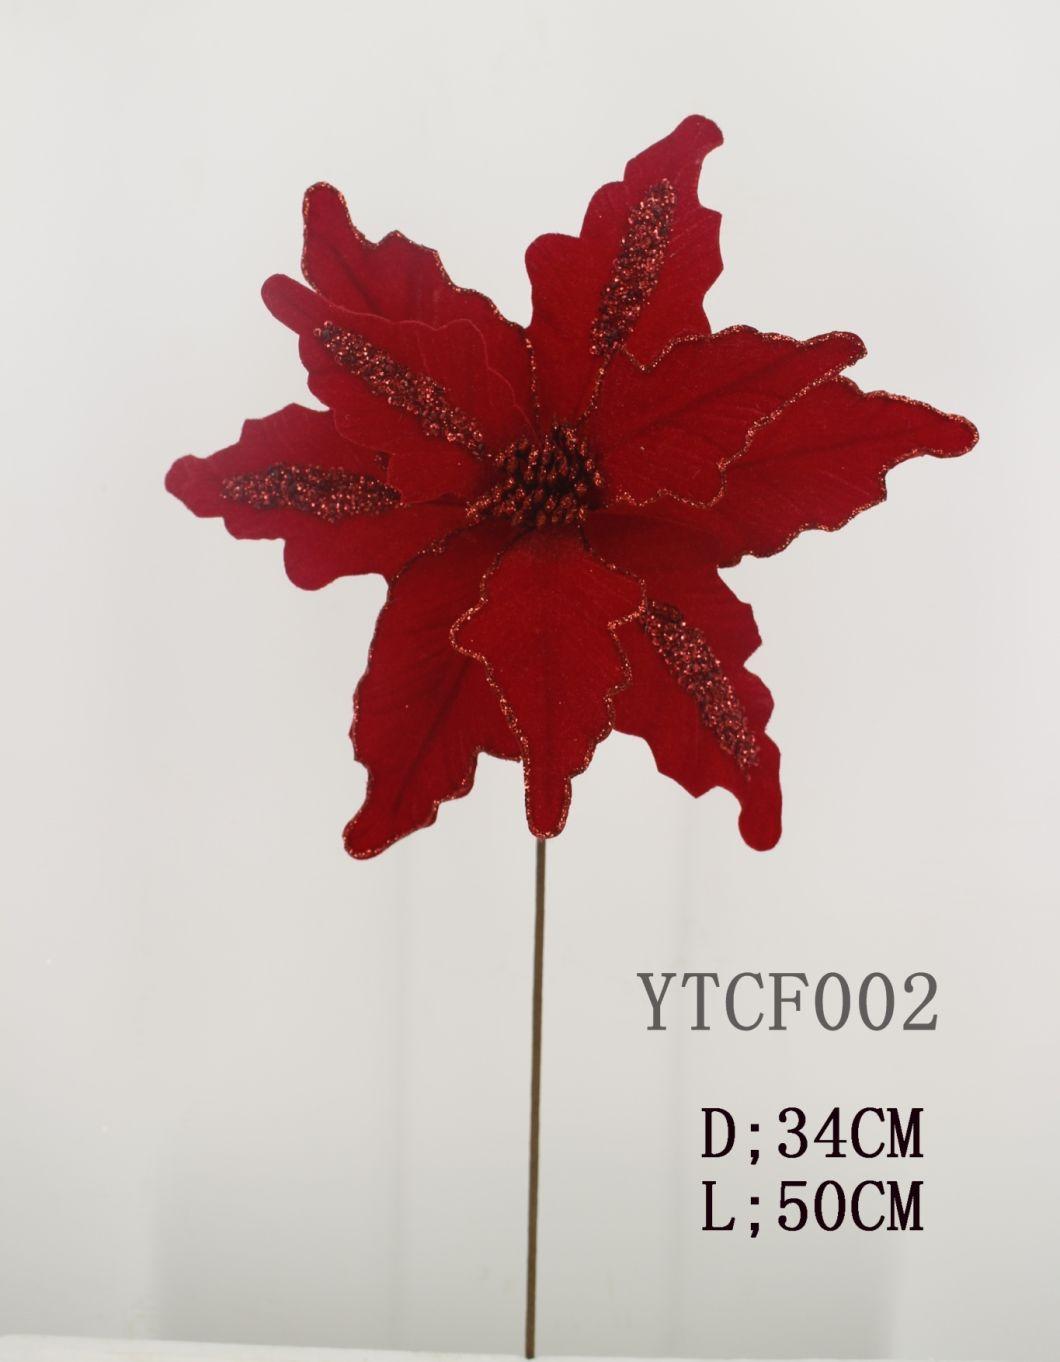 Ytcf013 Hot Selling Velvet Red Poinsettia Flowers Christmas Florals